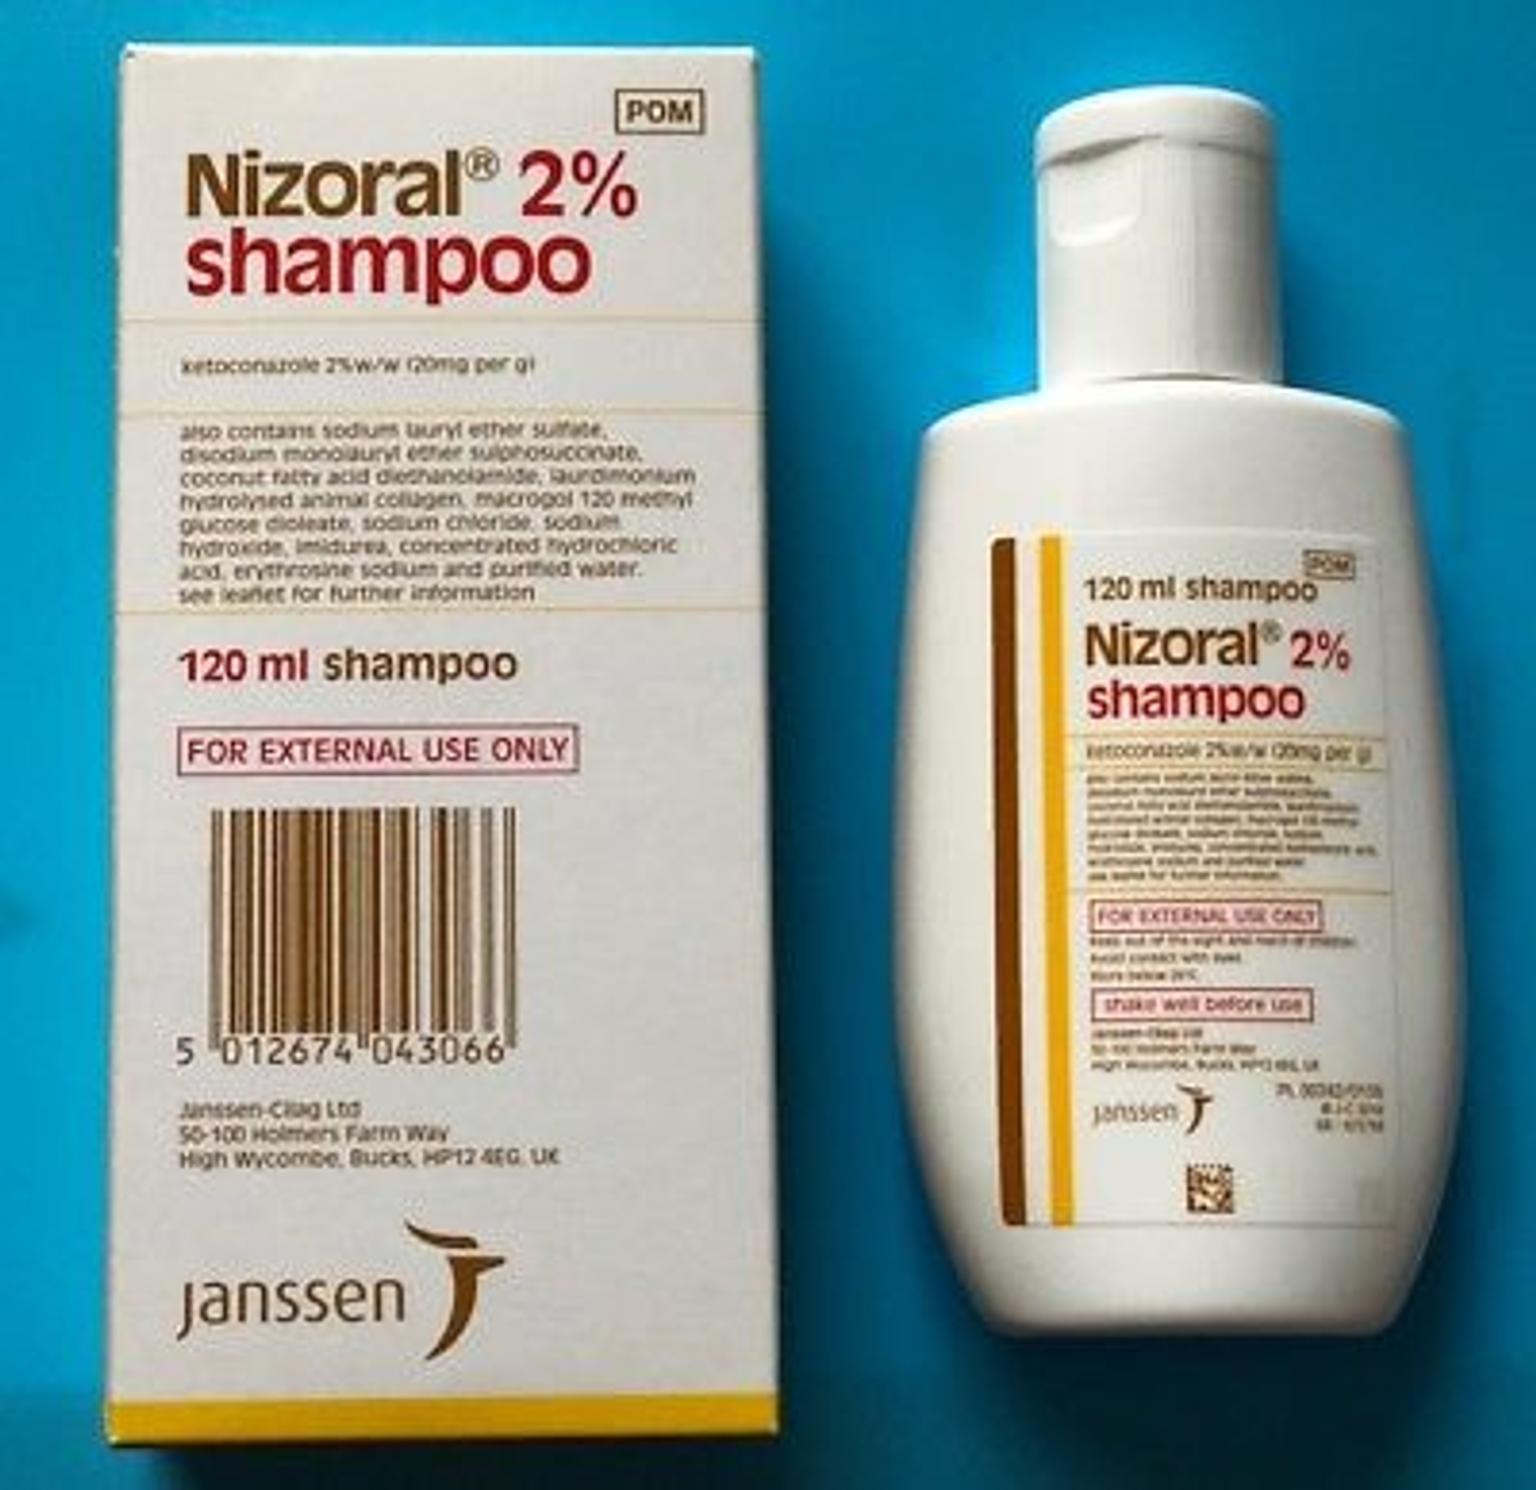 nizoral shampoo for skin review